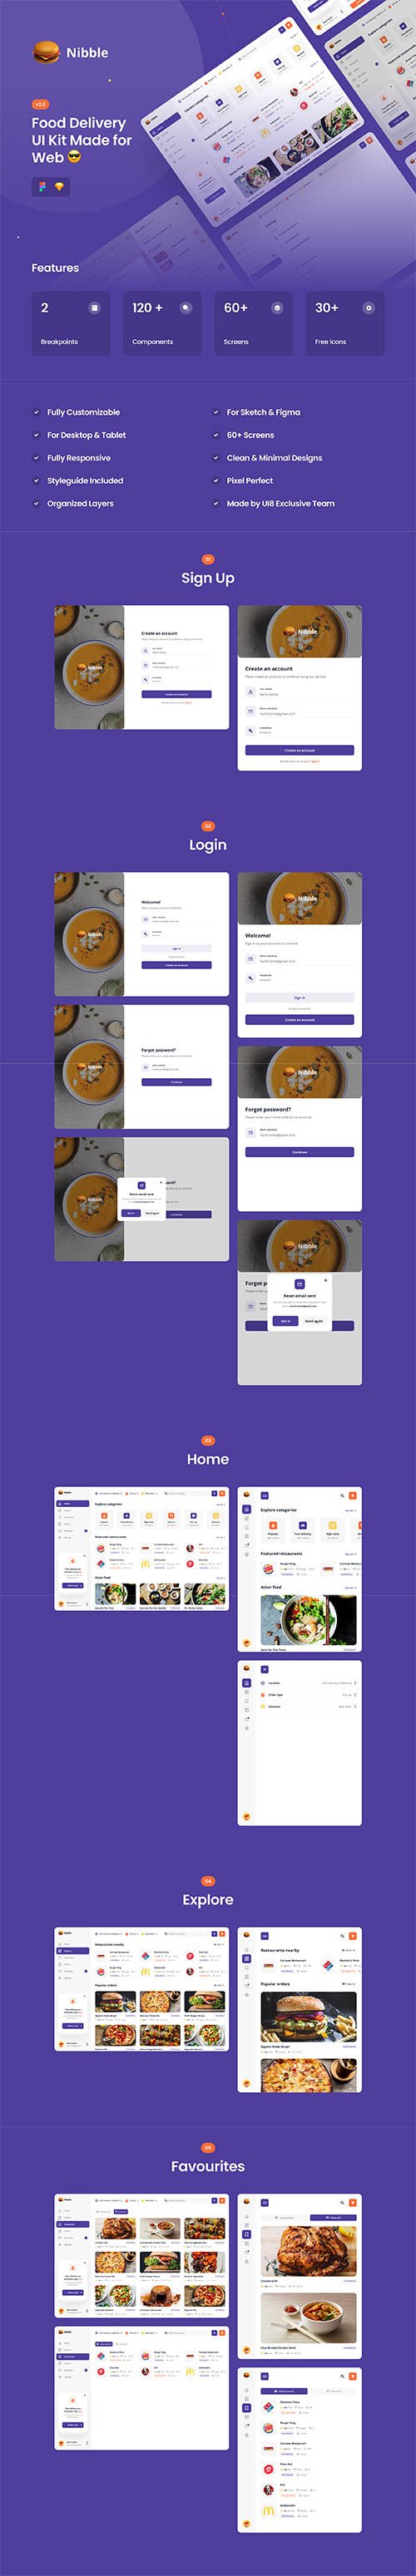 UI8 - Nibble: Food Delivery Web UI Kit